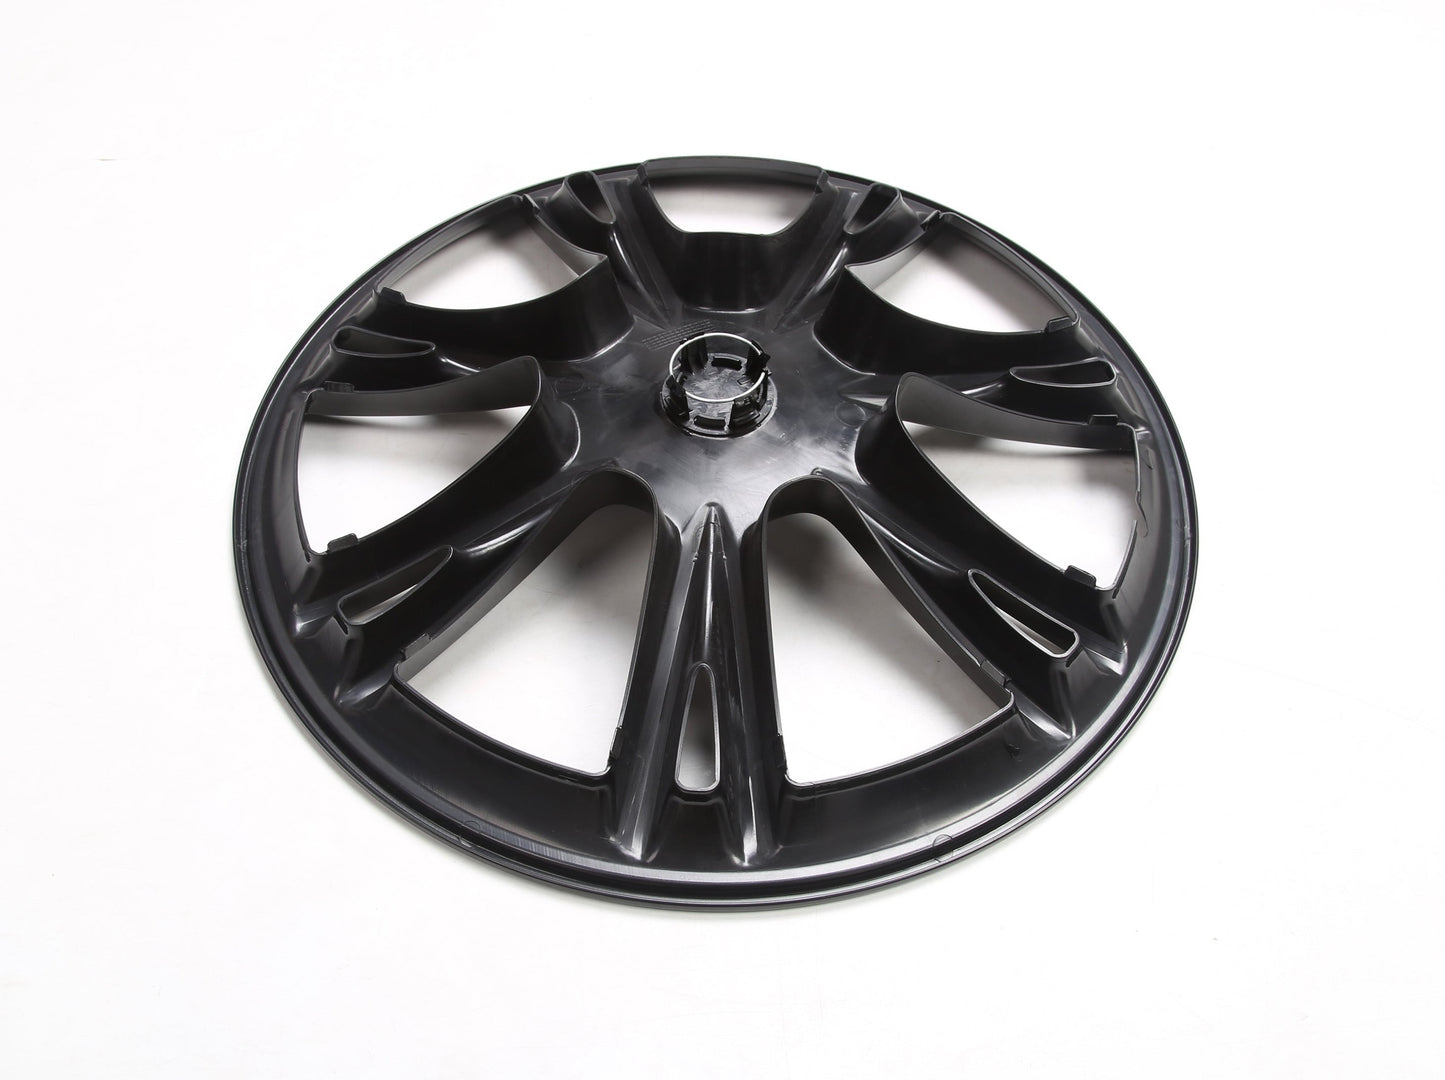 Model Y: 19" Stock Wheel Rim Protector Cover Set (4 PCs)